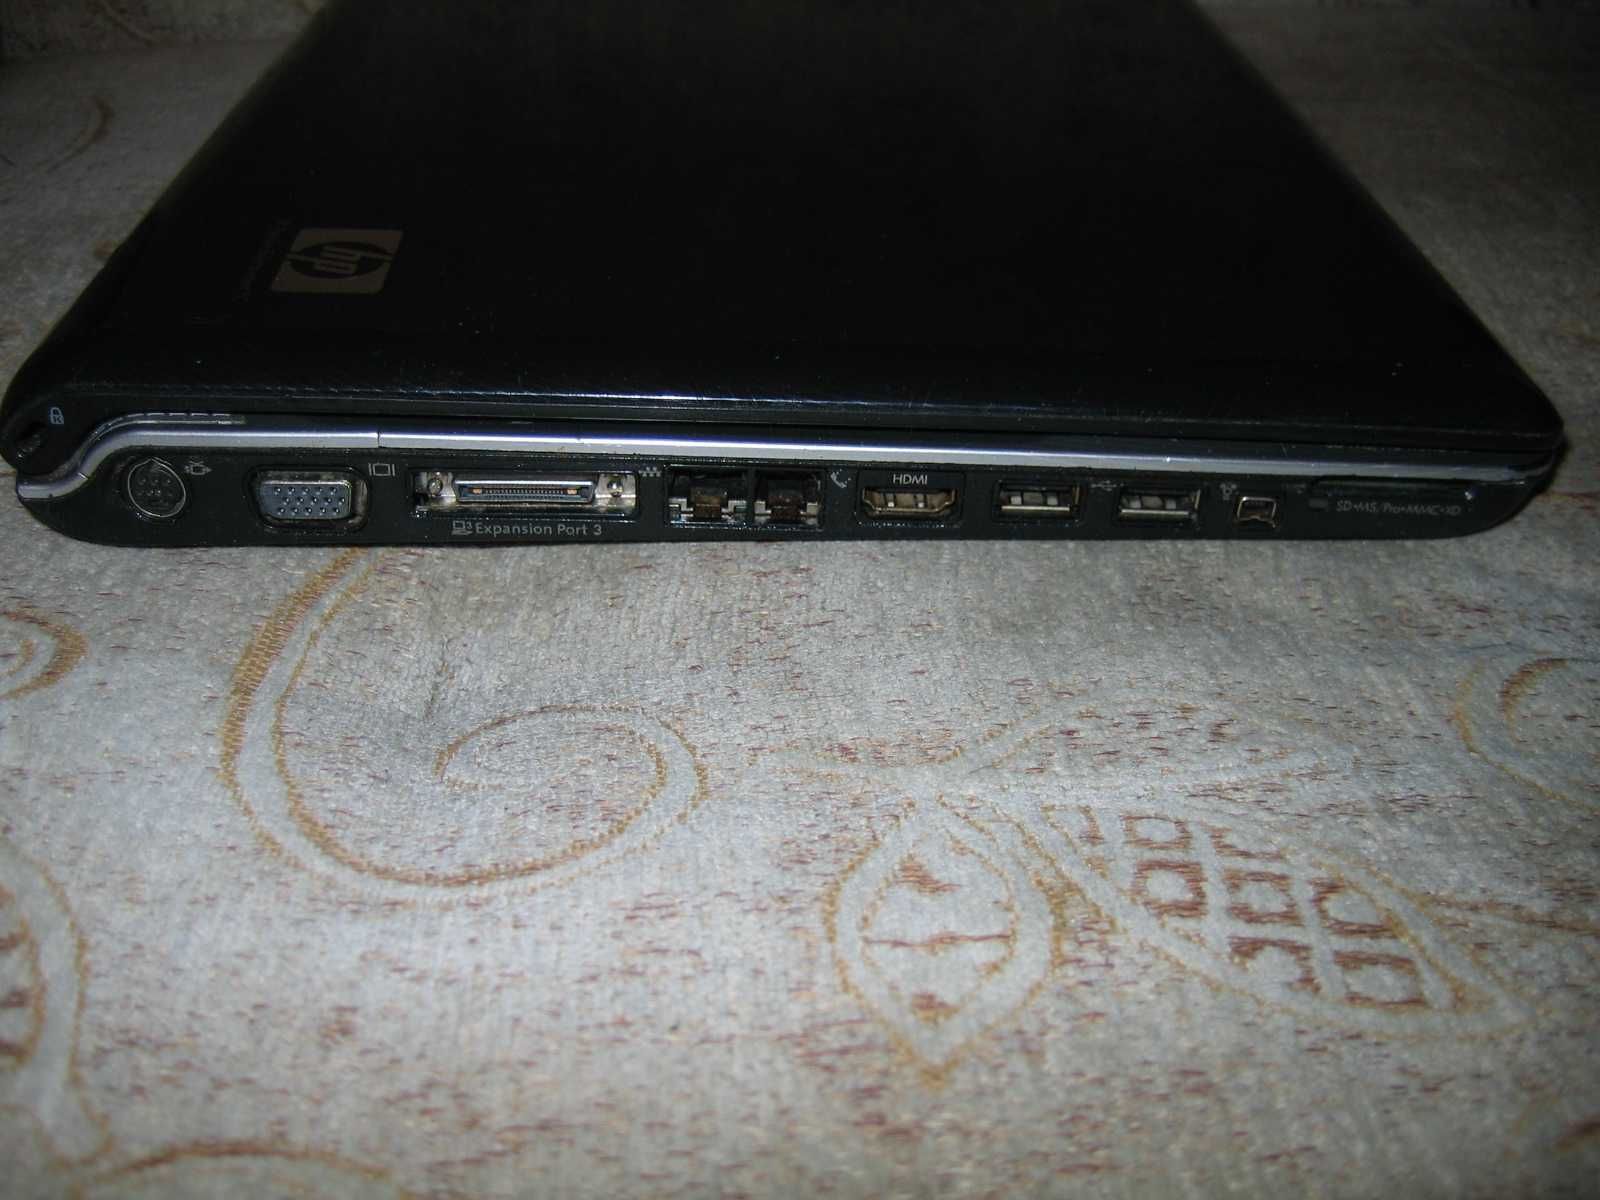 Laptop HP DV6807EF Intel Dual 1,73GHz NVIDIA 15,4" sprawny, niekompl.